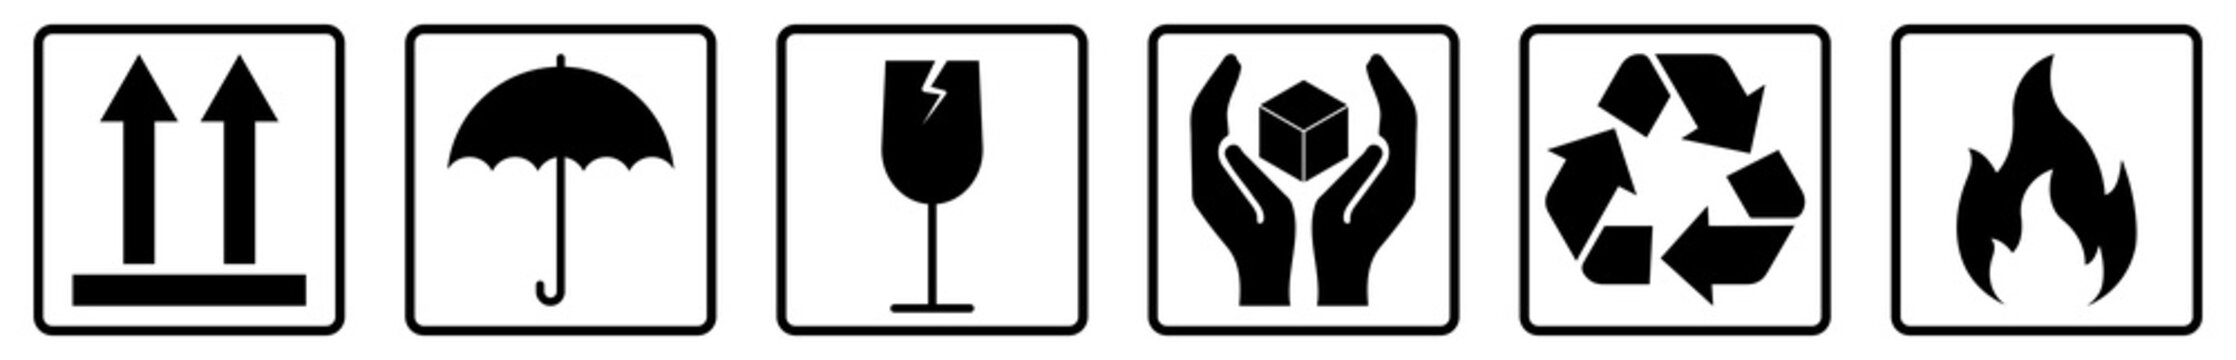 Set of fragile care sign for packing. Warning symbols. Vector illustration isolated on white background